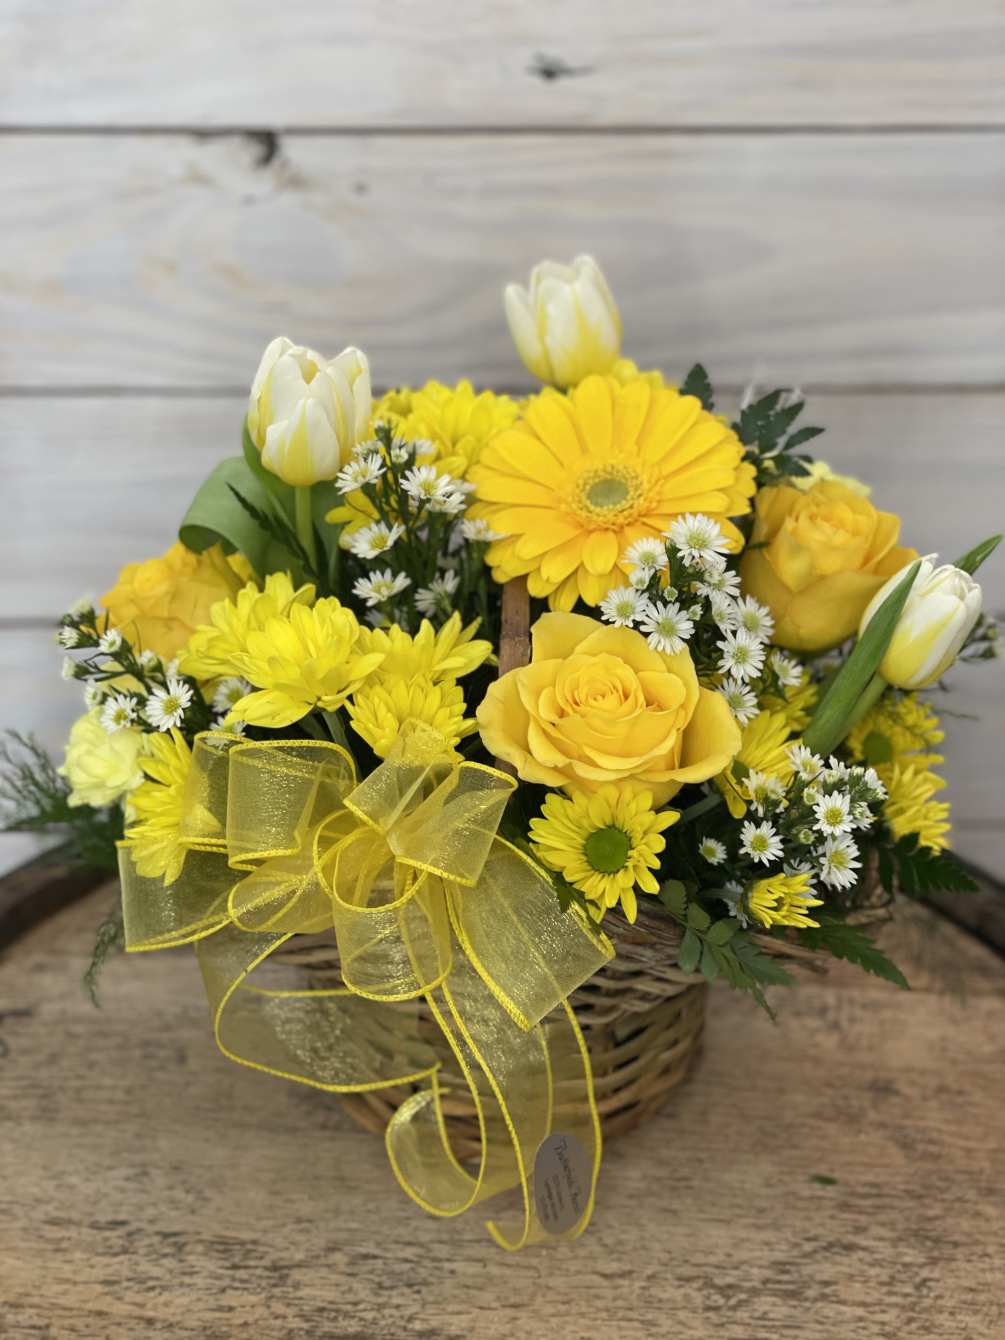 An all yellow basket arrangement of gerbera daisies, solidago, daisies, &amp; roses.